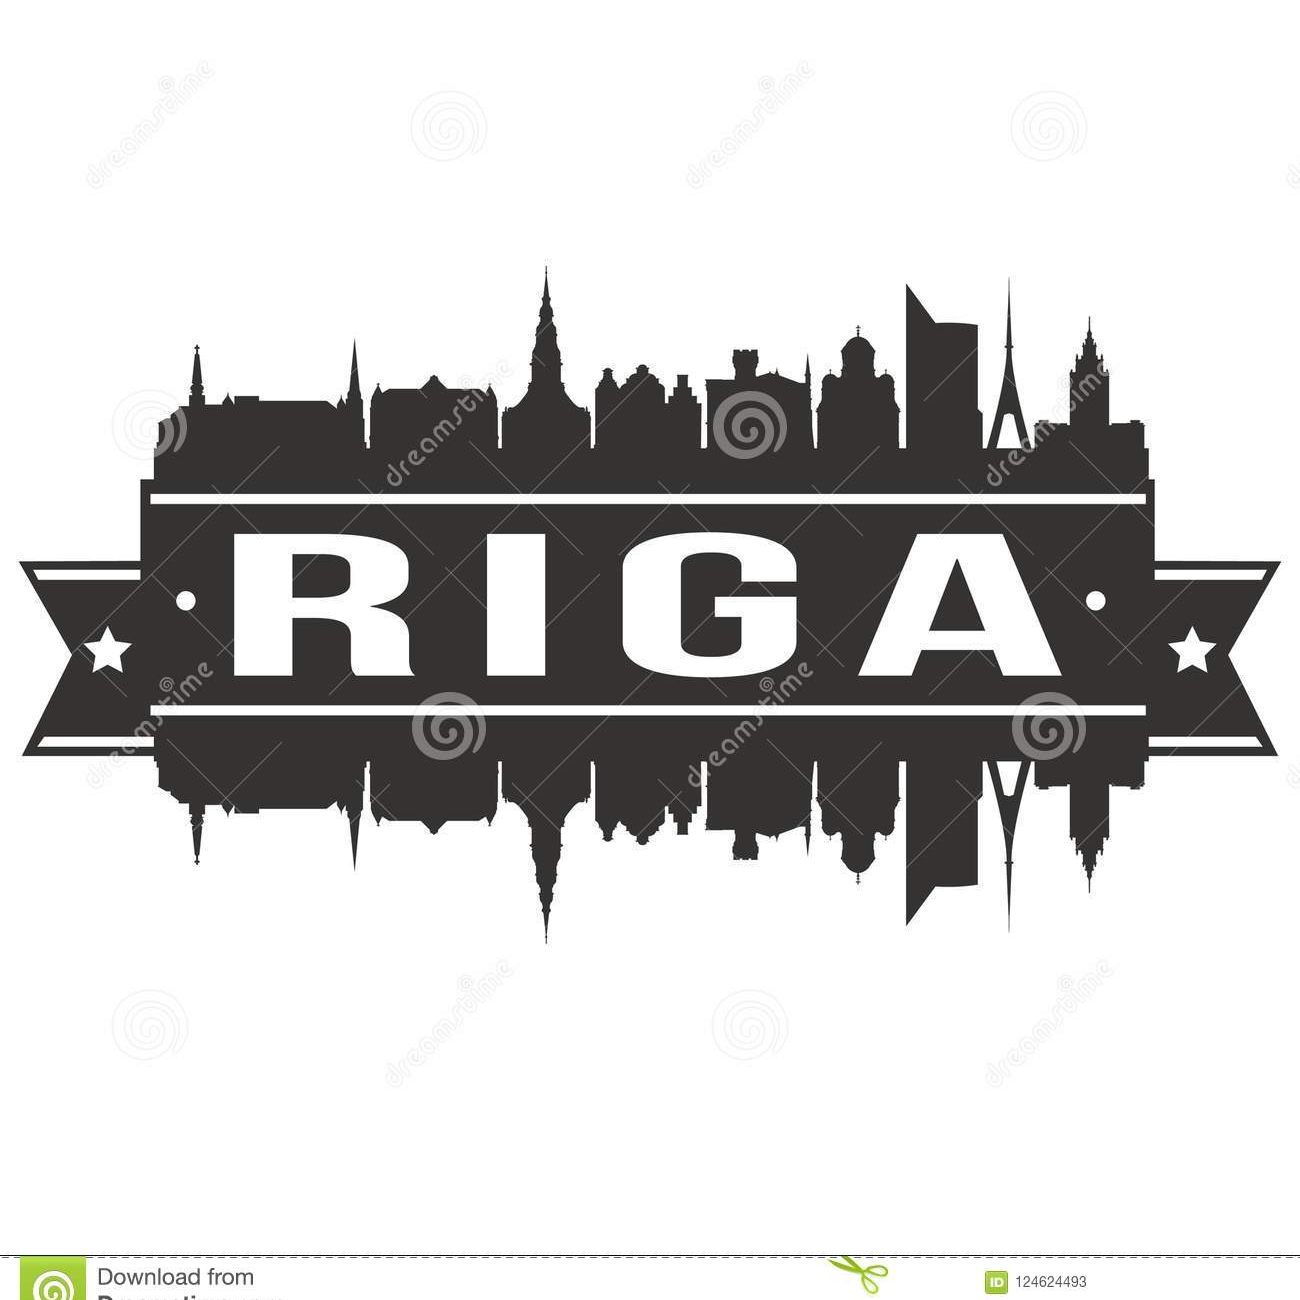 Riga Beats